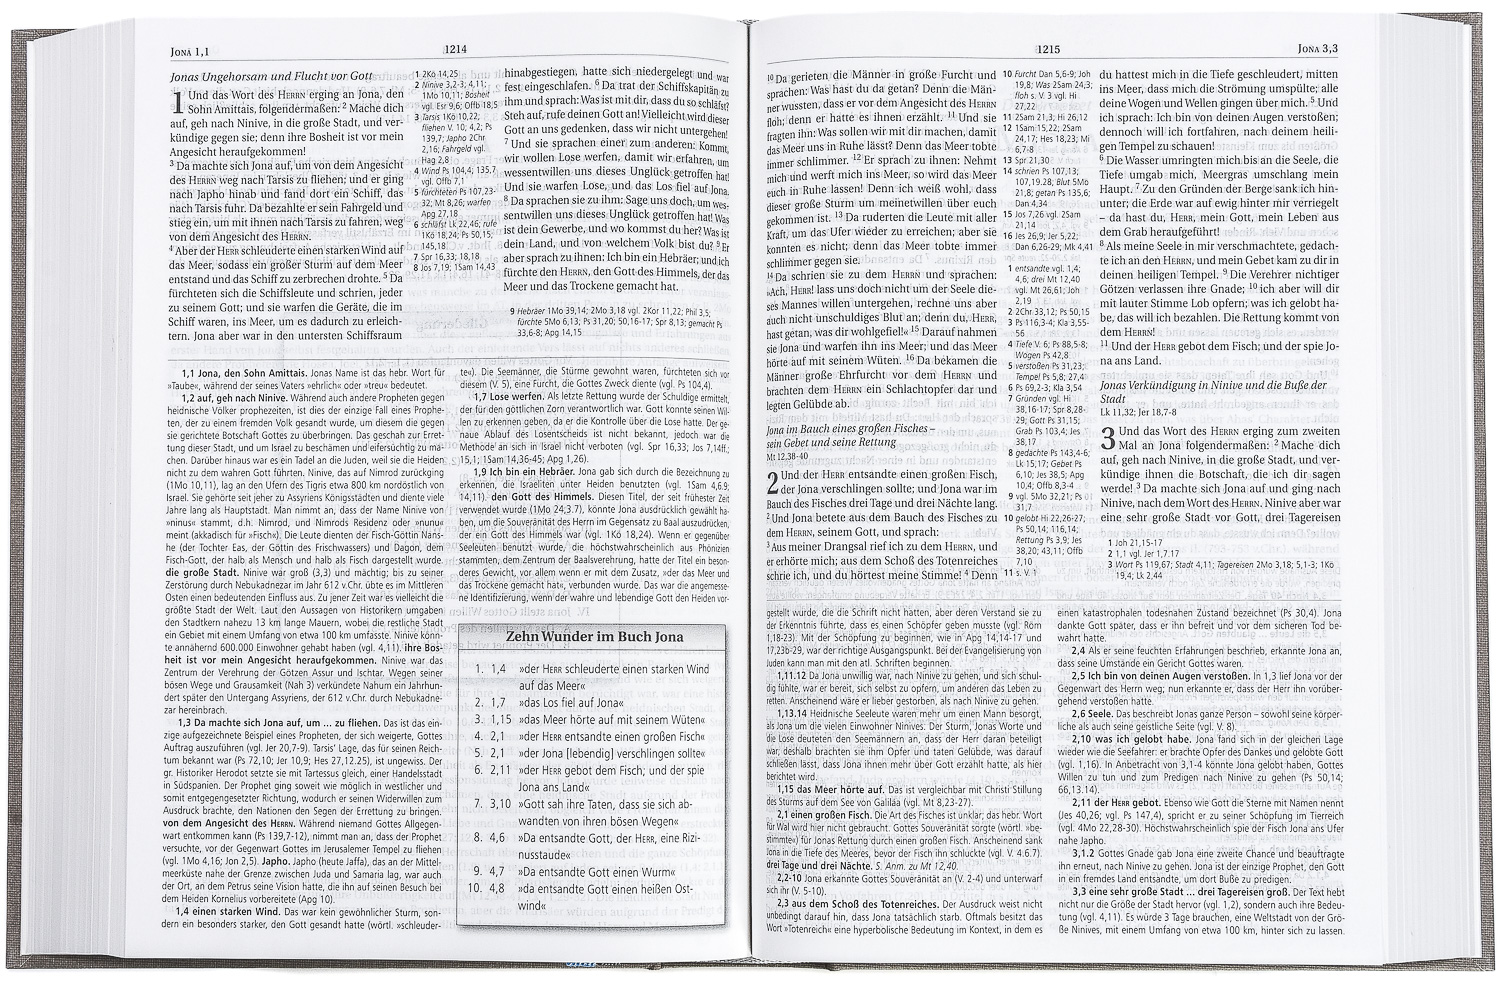 MacArthur Studienbibel – Schlachter 2000 (Hardcover, grau)